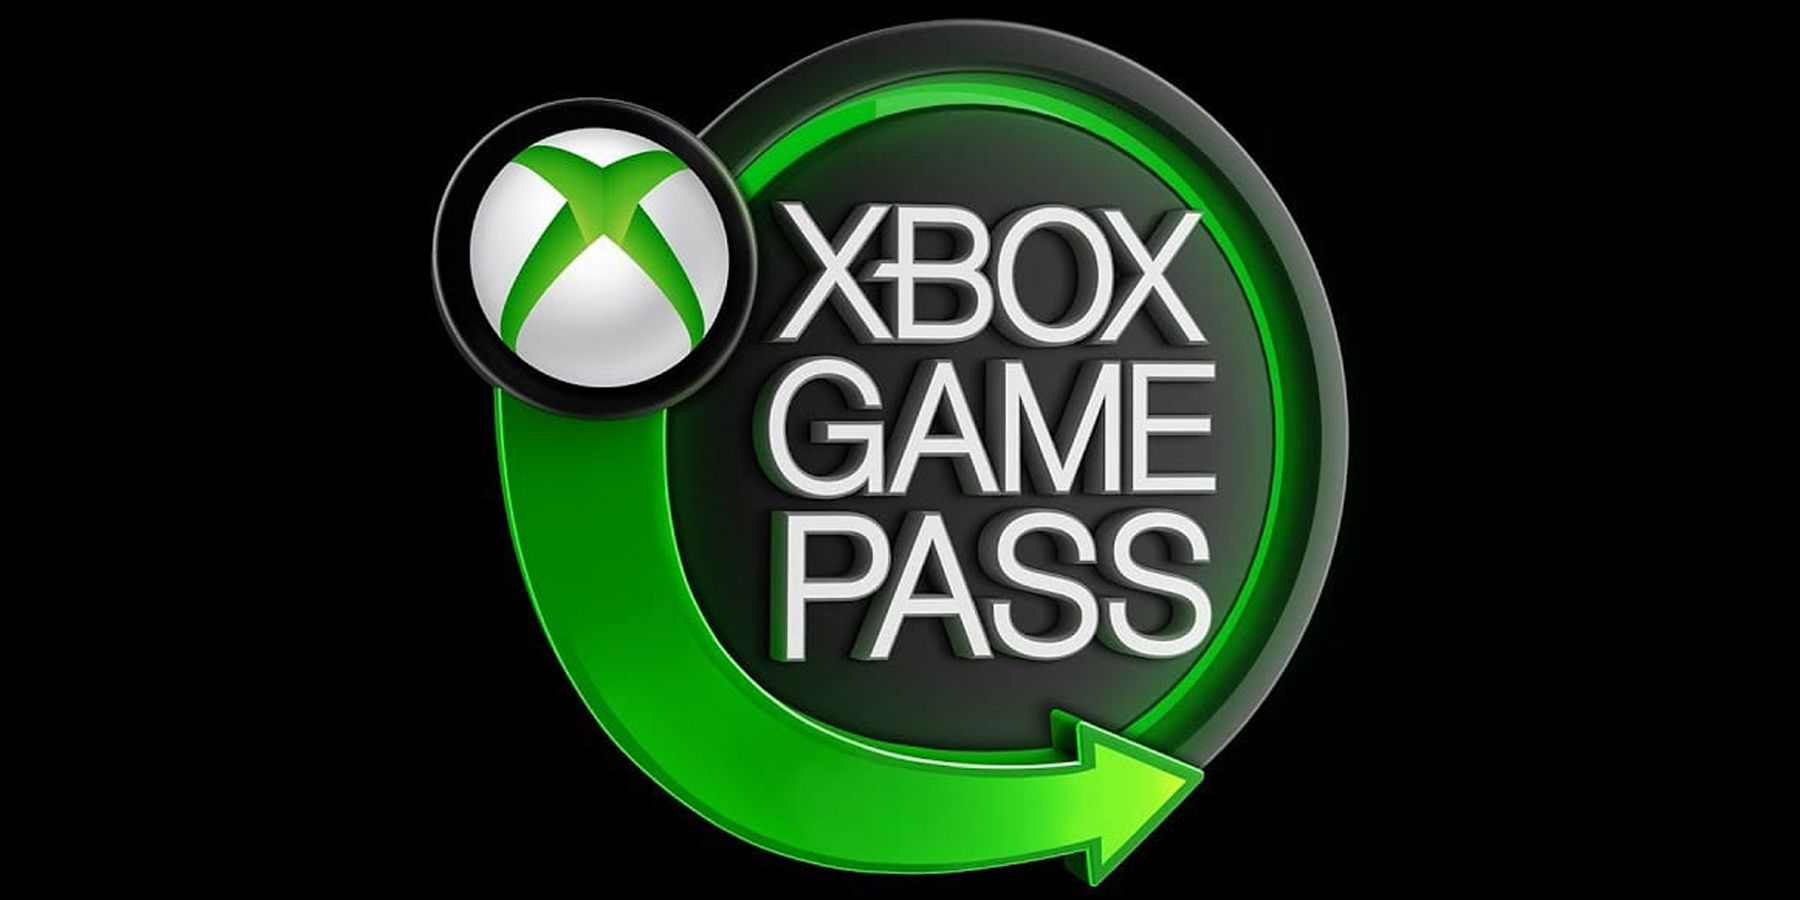 XBox Game Pass old logo